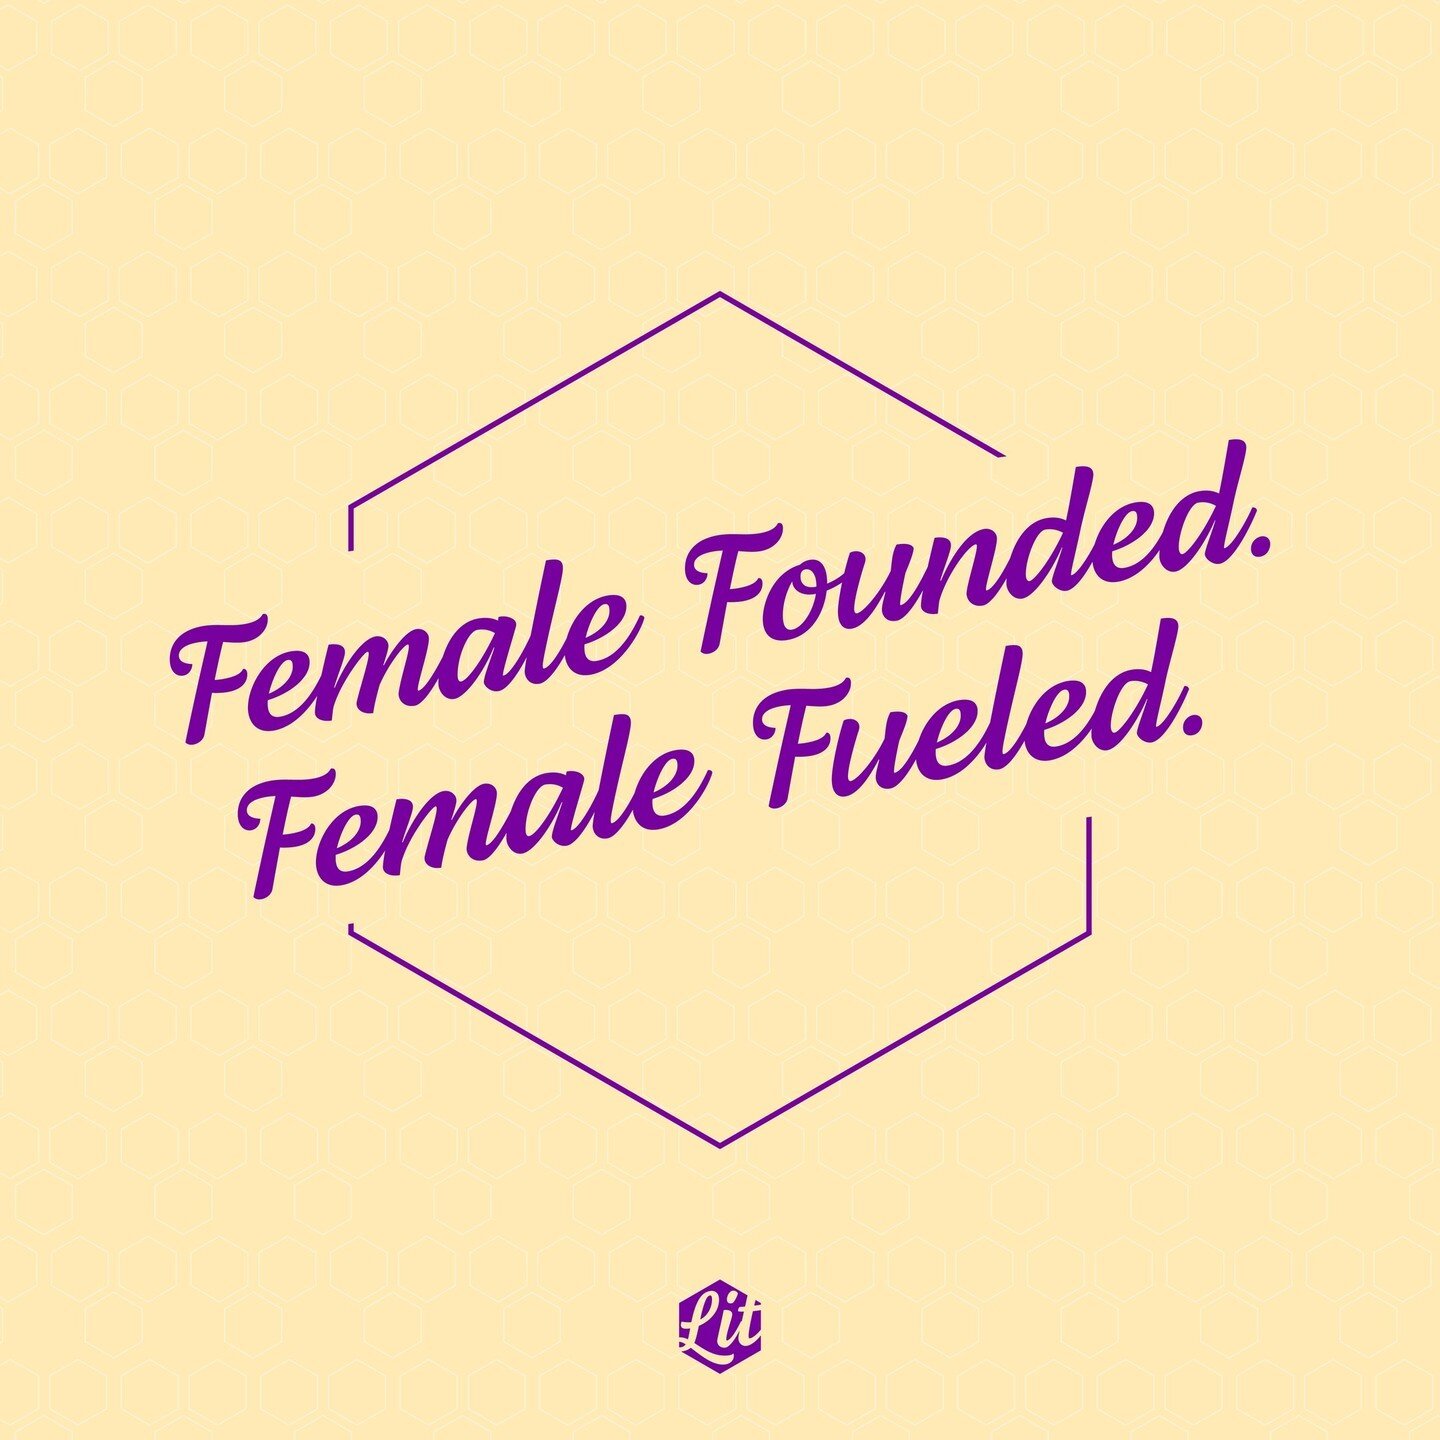 Female Founded. Female Fueled. 💜